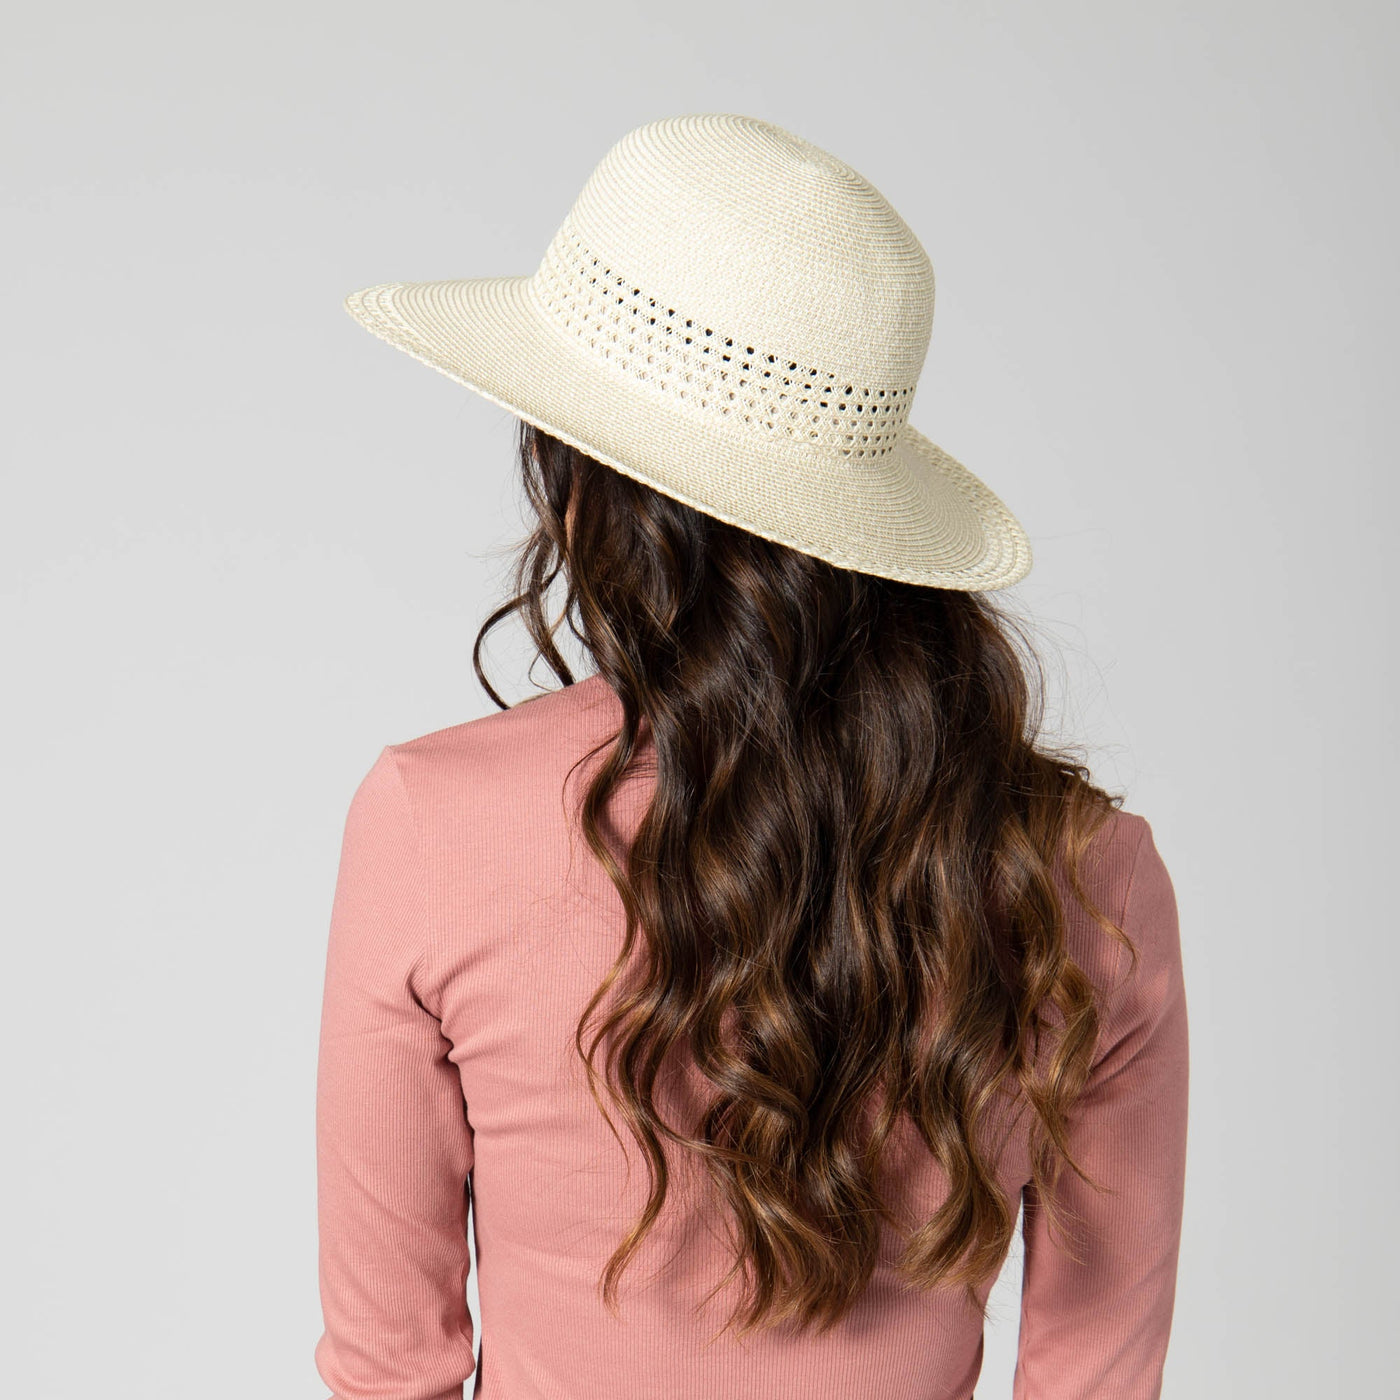 SUN BRIM - Everyday Sun Hat - Women's Sun Hat W/ Open Weave Stripes